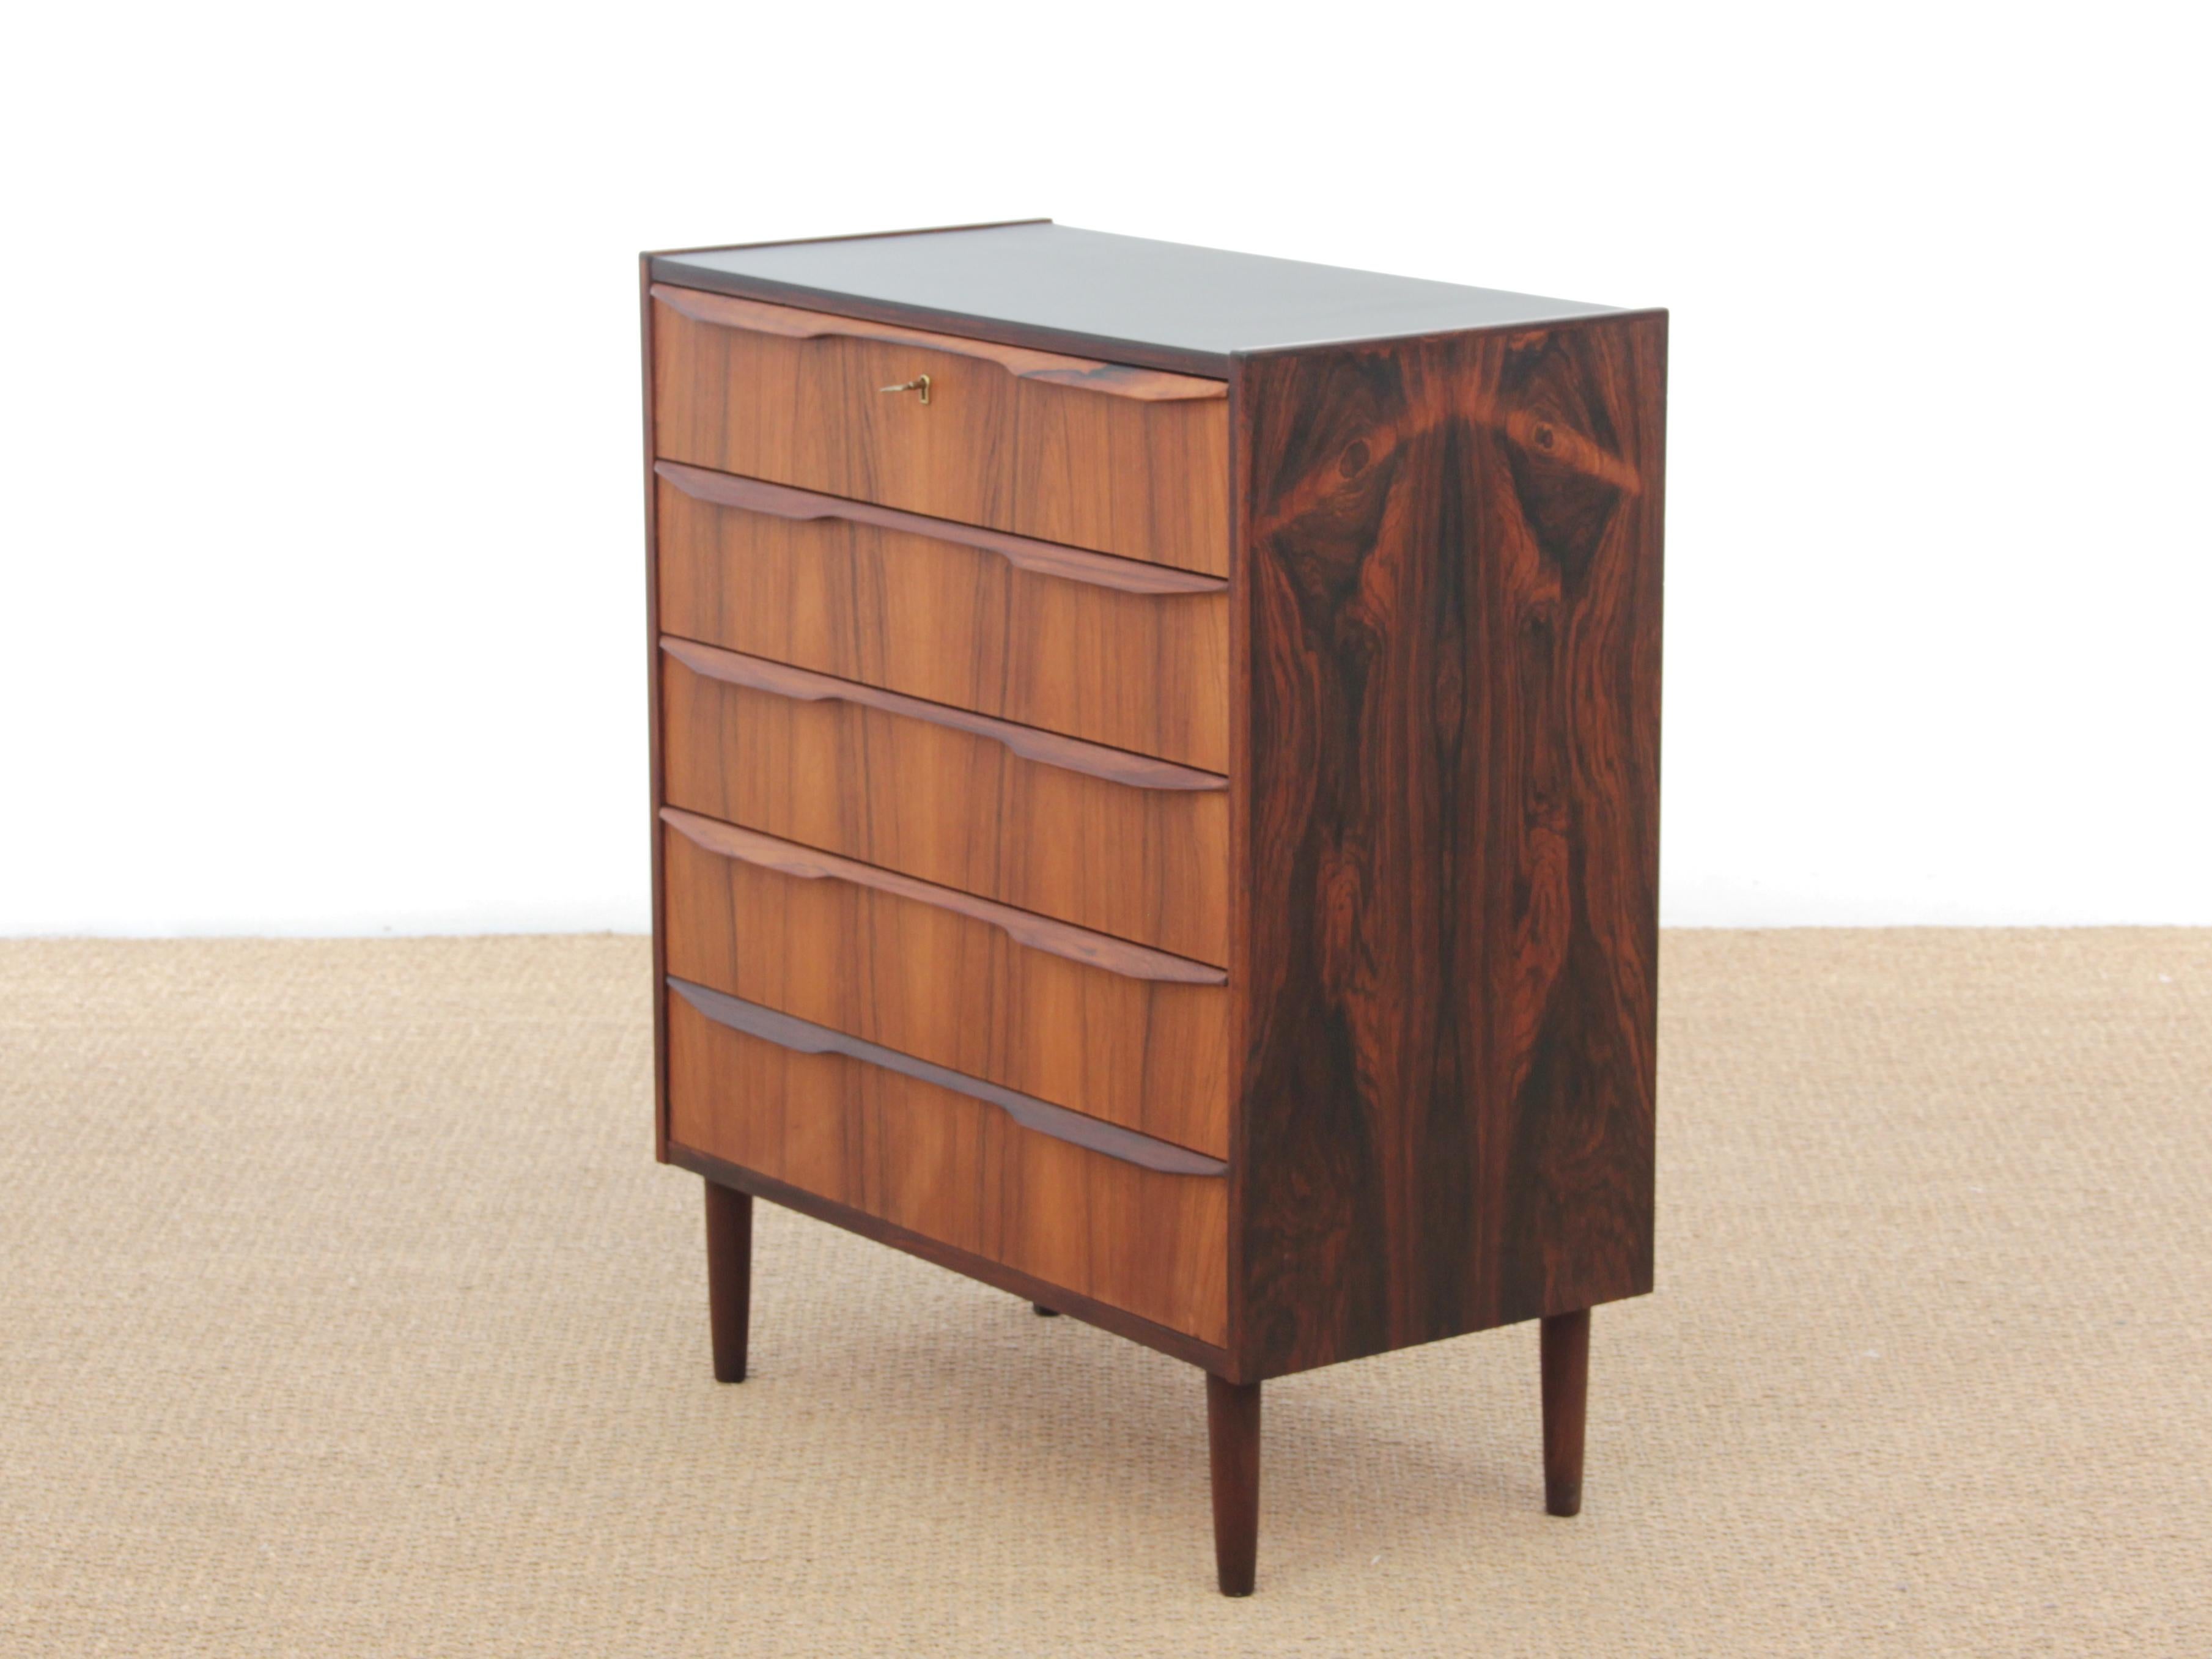 Danish modern chest of drawers in rosewood. Top in black Melanie.